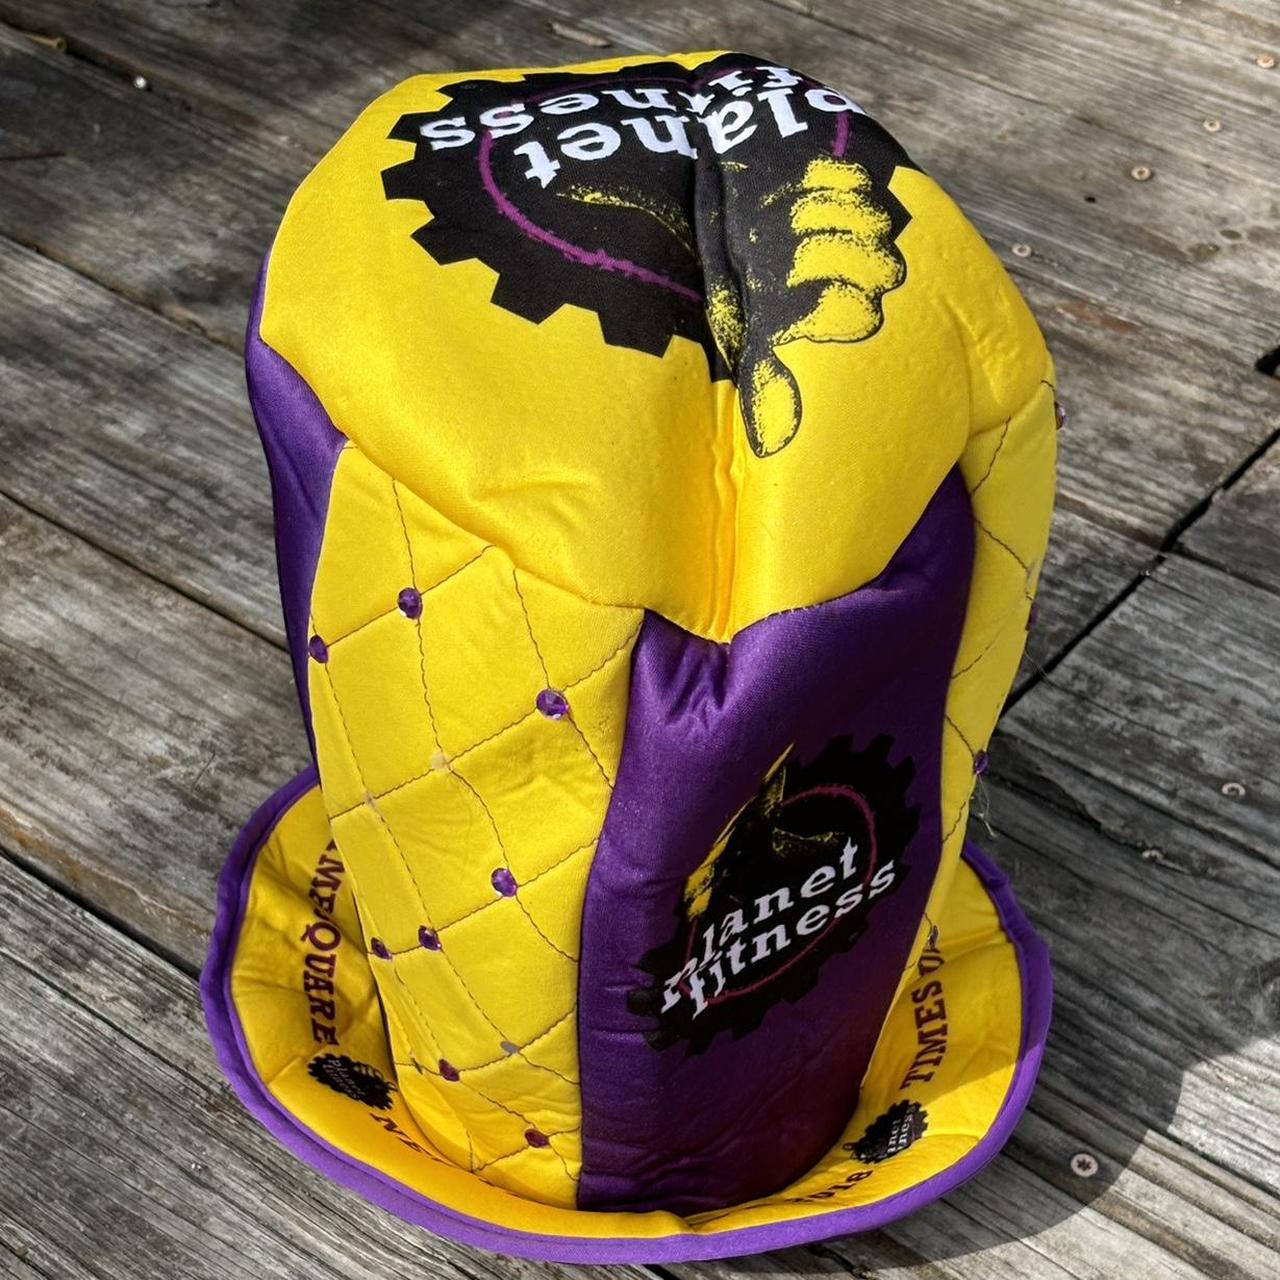 Rare Planet Fitness hat. This purple & yellow hat - Depop